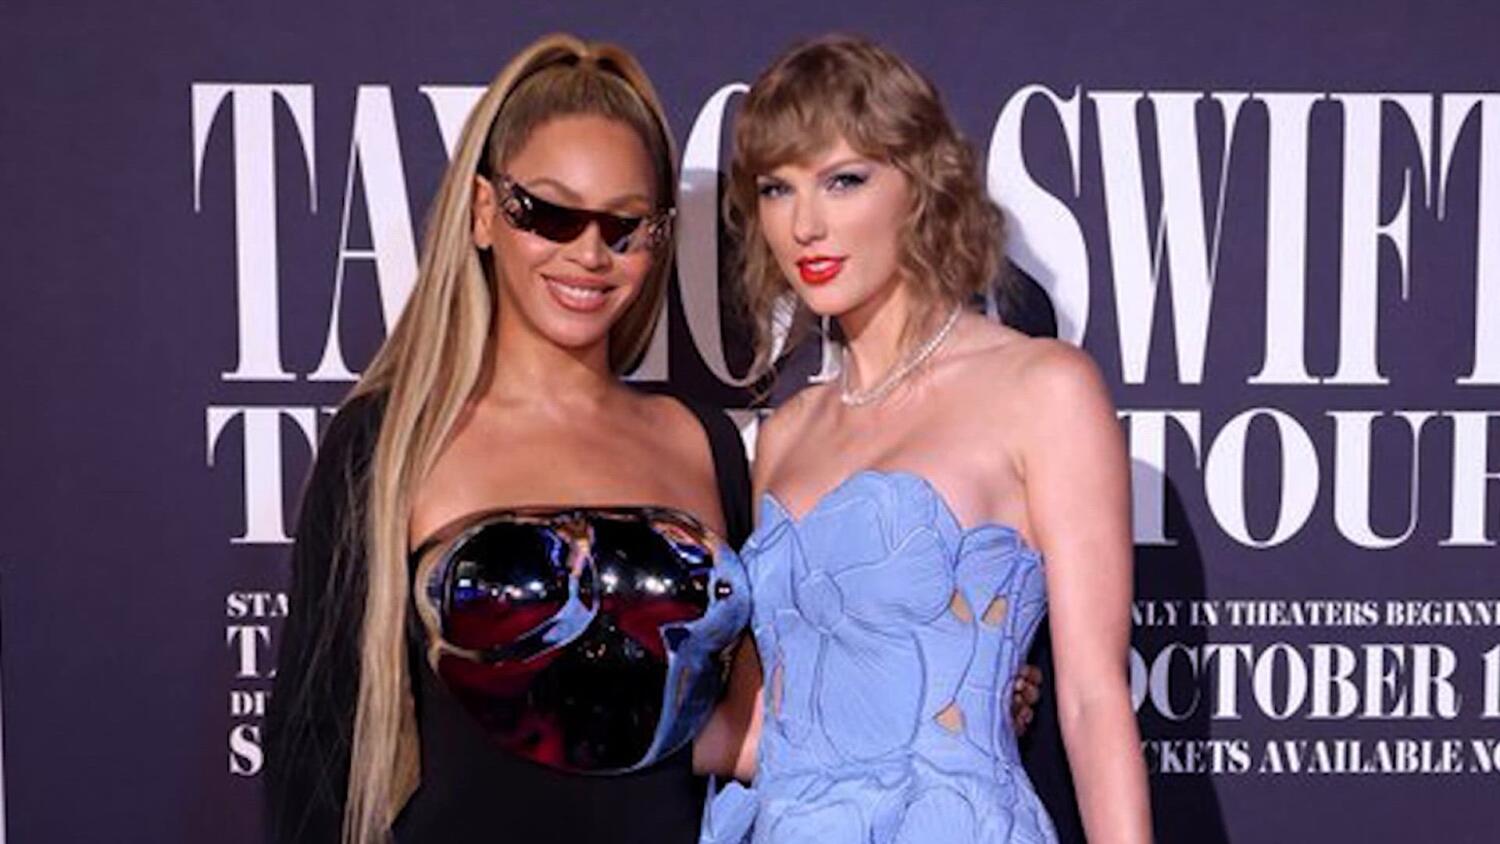 No surprise here: Taylor Swift, Beyoncé concert films boost AMC quarterly earnings